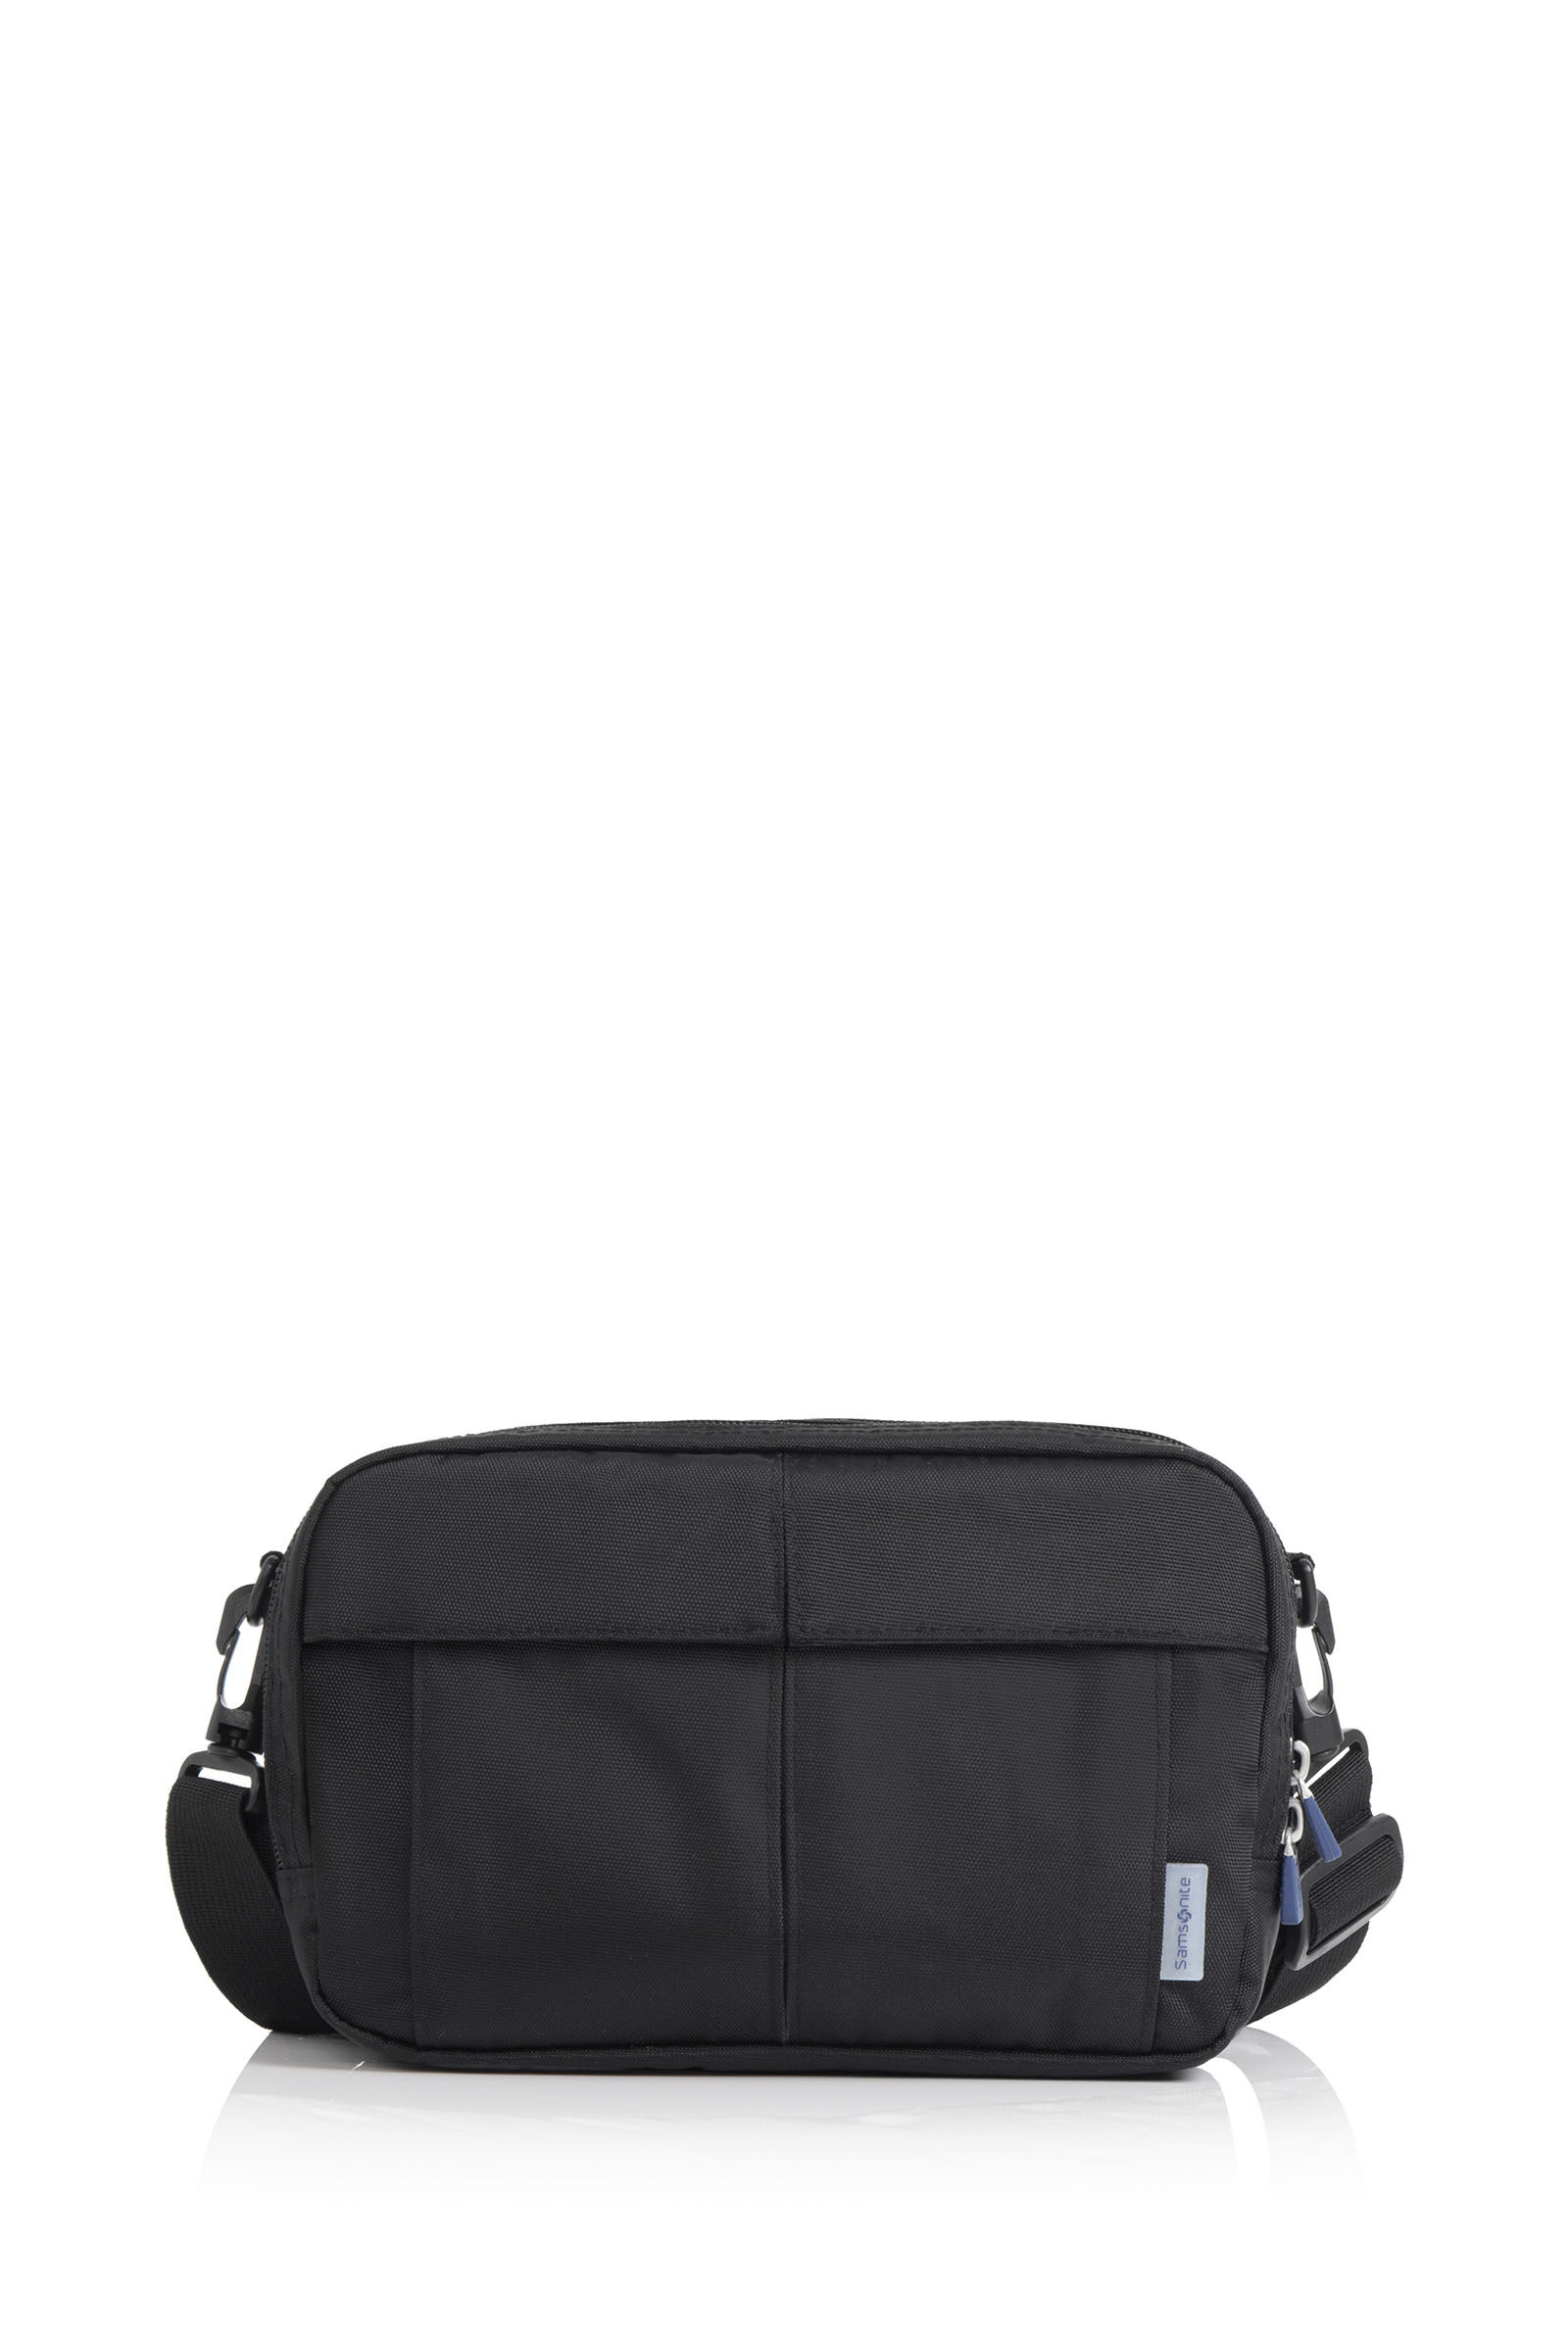 Amazon.com | Samsonite Travel Bags, Black (Asphalt Black), M (68 cm-84 L) |  Carry-Ons